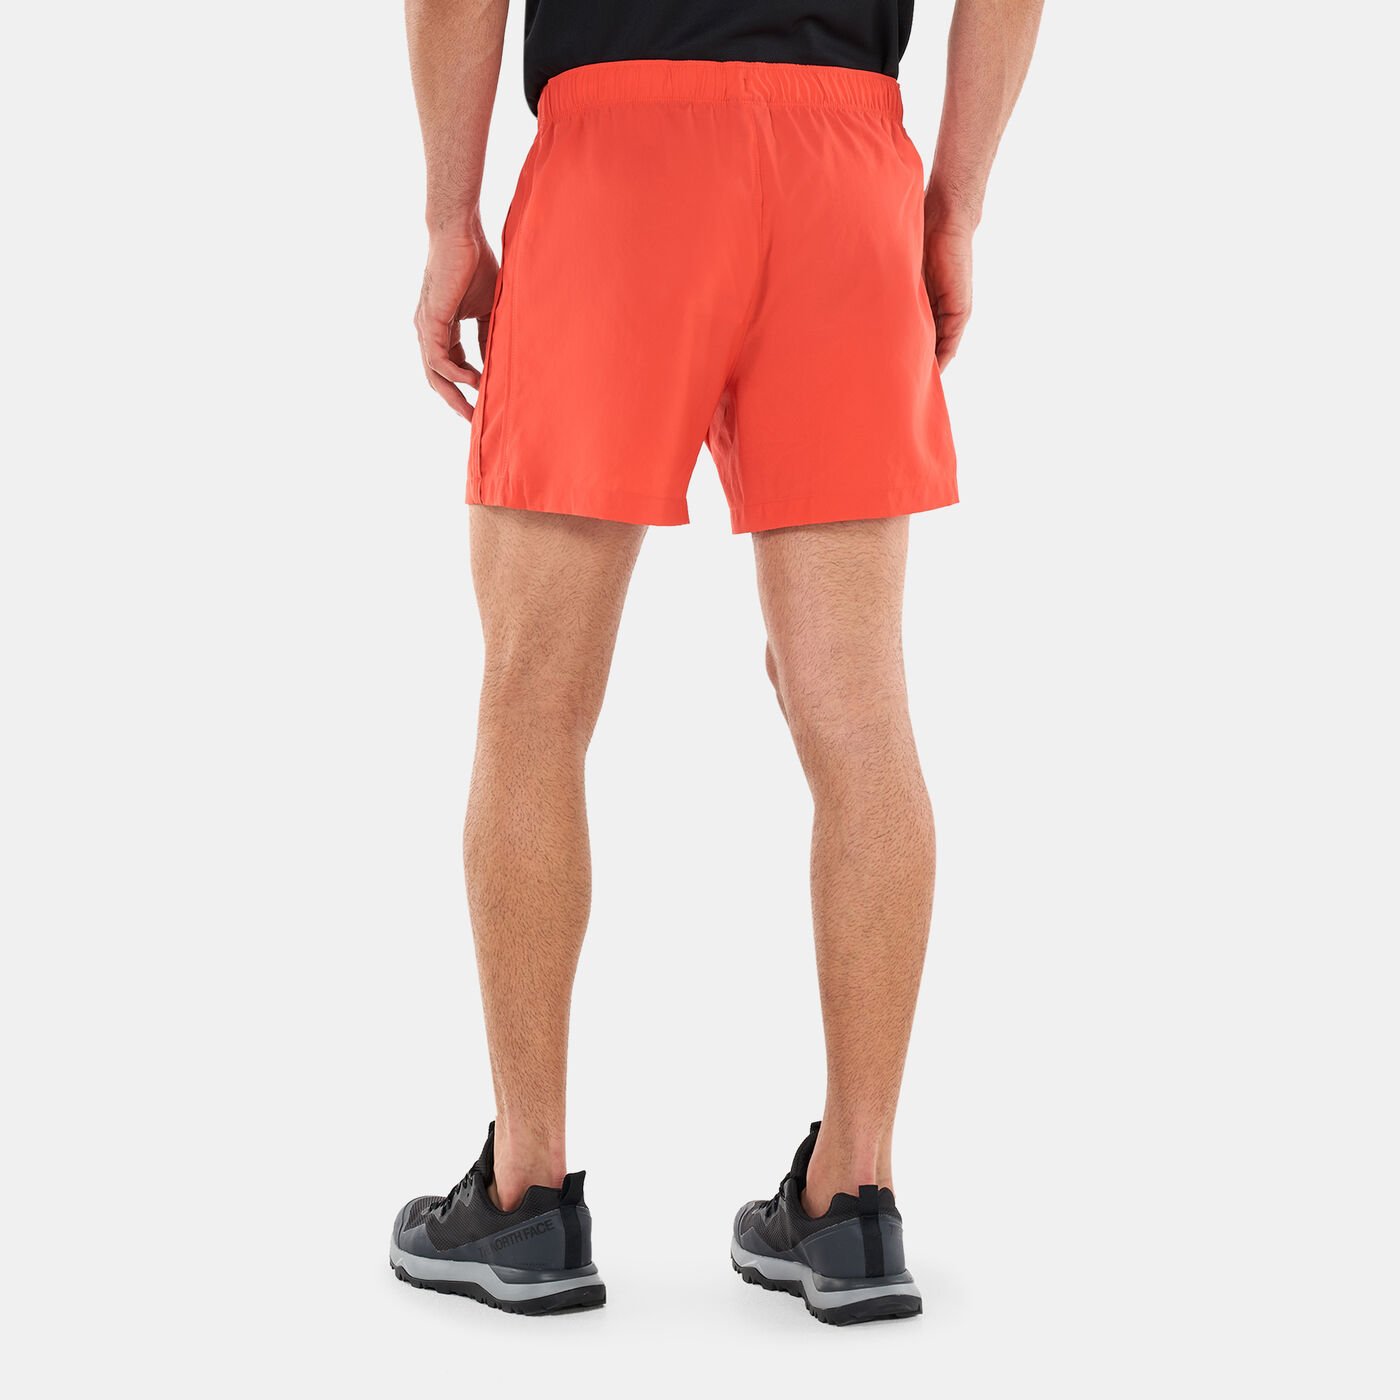 Men's Freedomlight Shorts